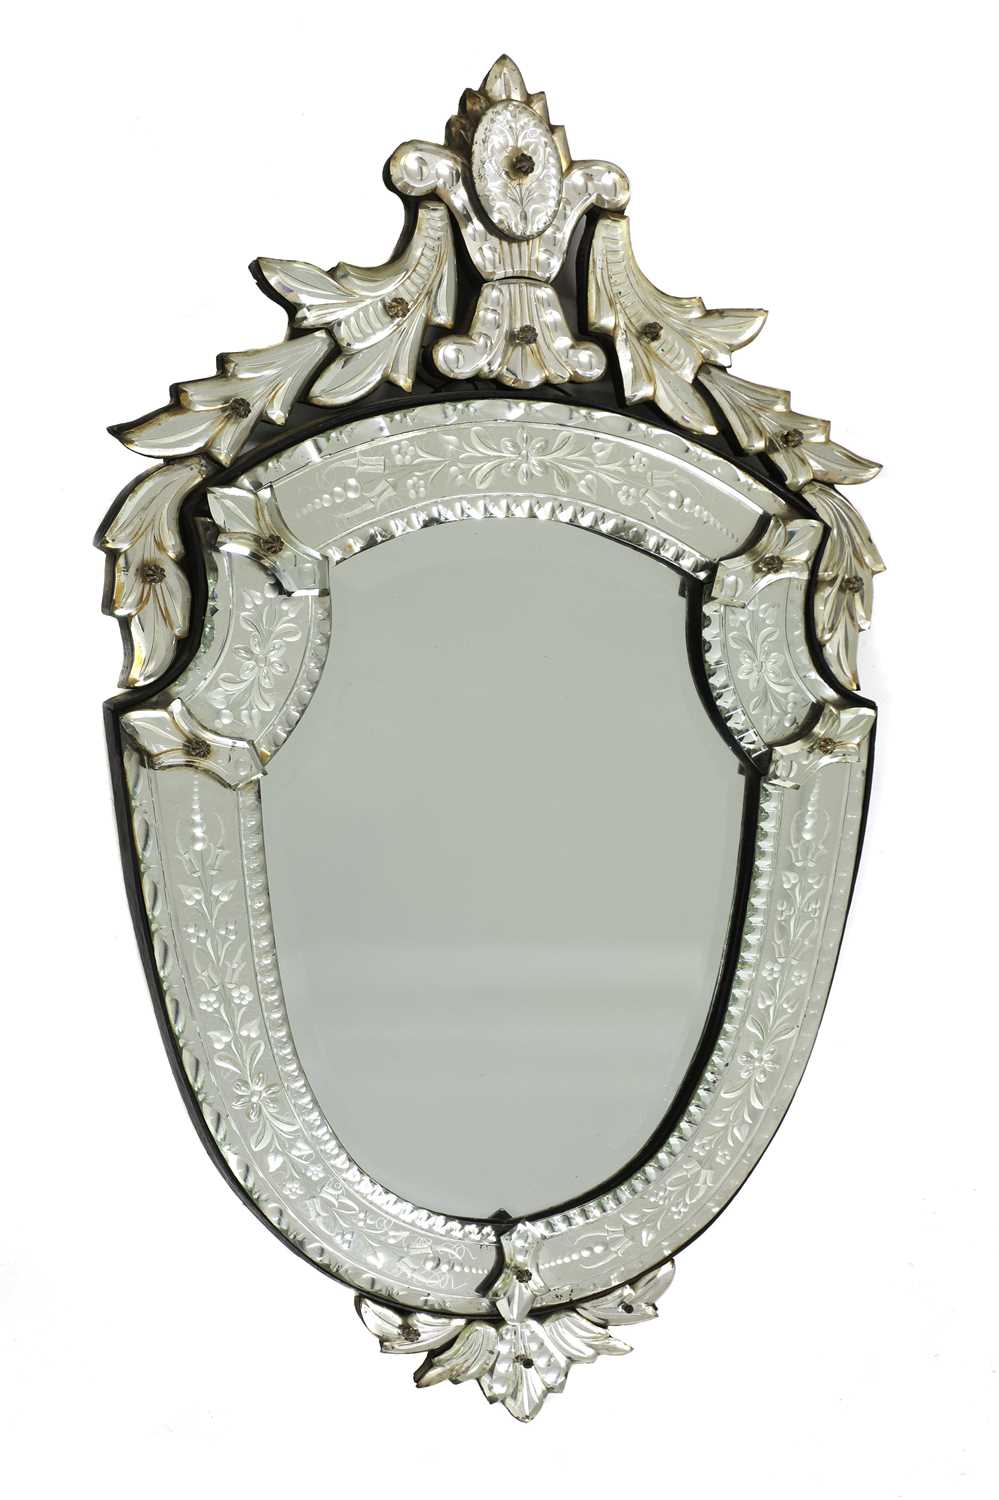 Lot 416 - A Venetian wall mirror